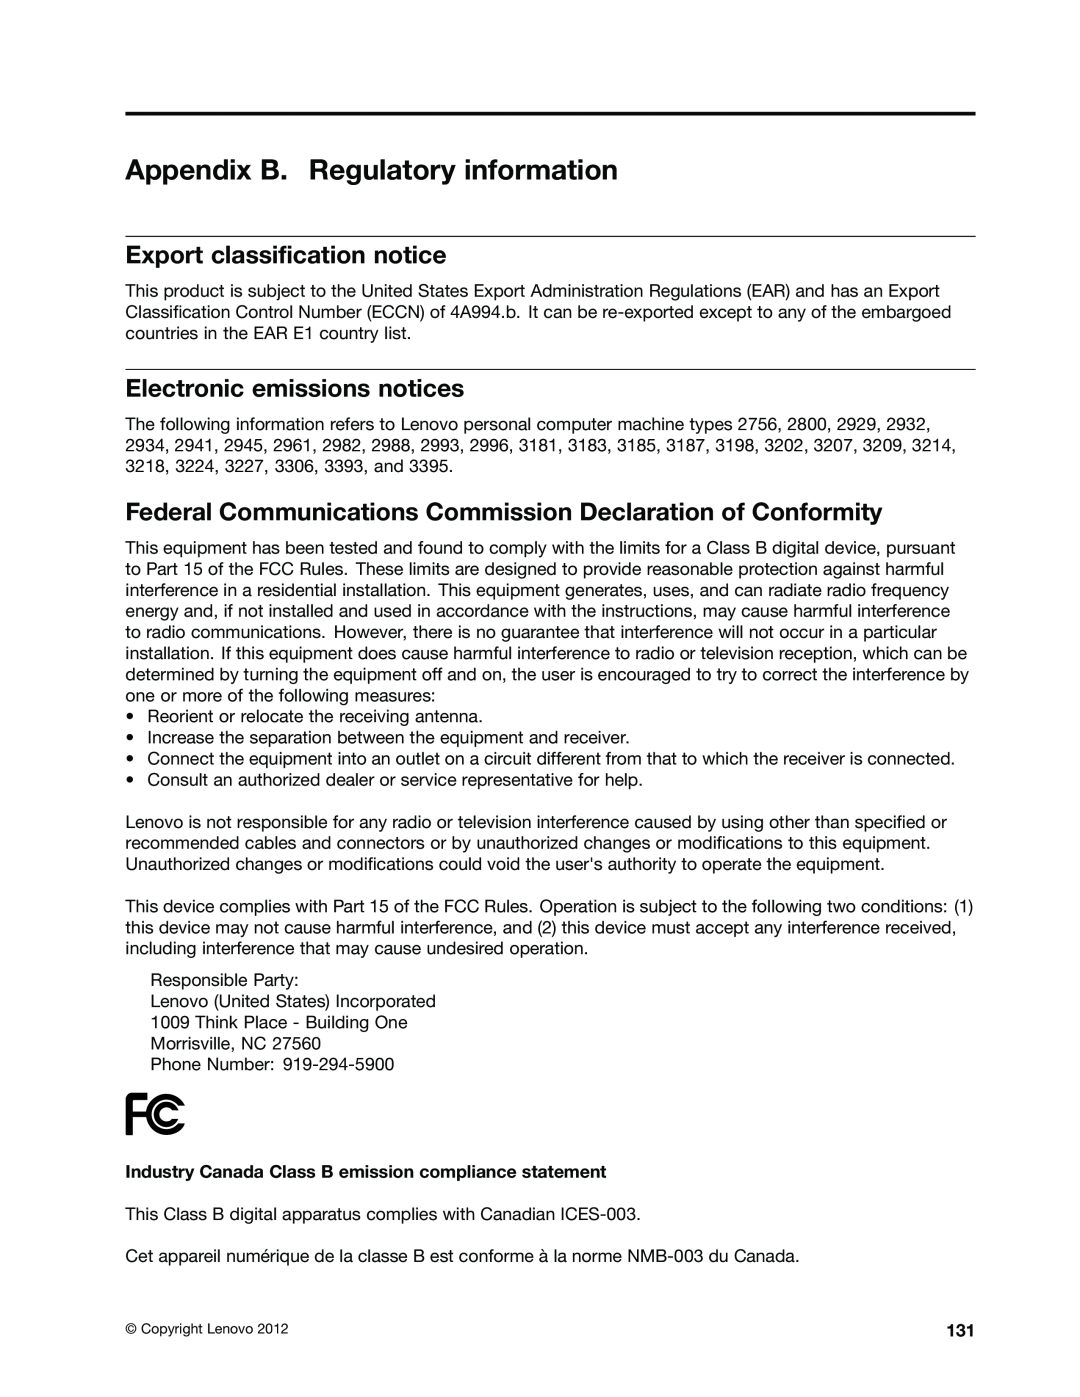 Lenovo 2993, 2988, 2992E5U Appendix B. Regulatory information, Export classification notice, Electronic emissions notices 